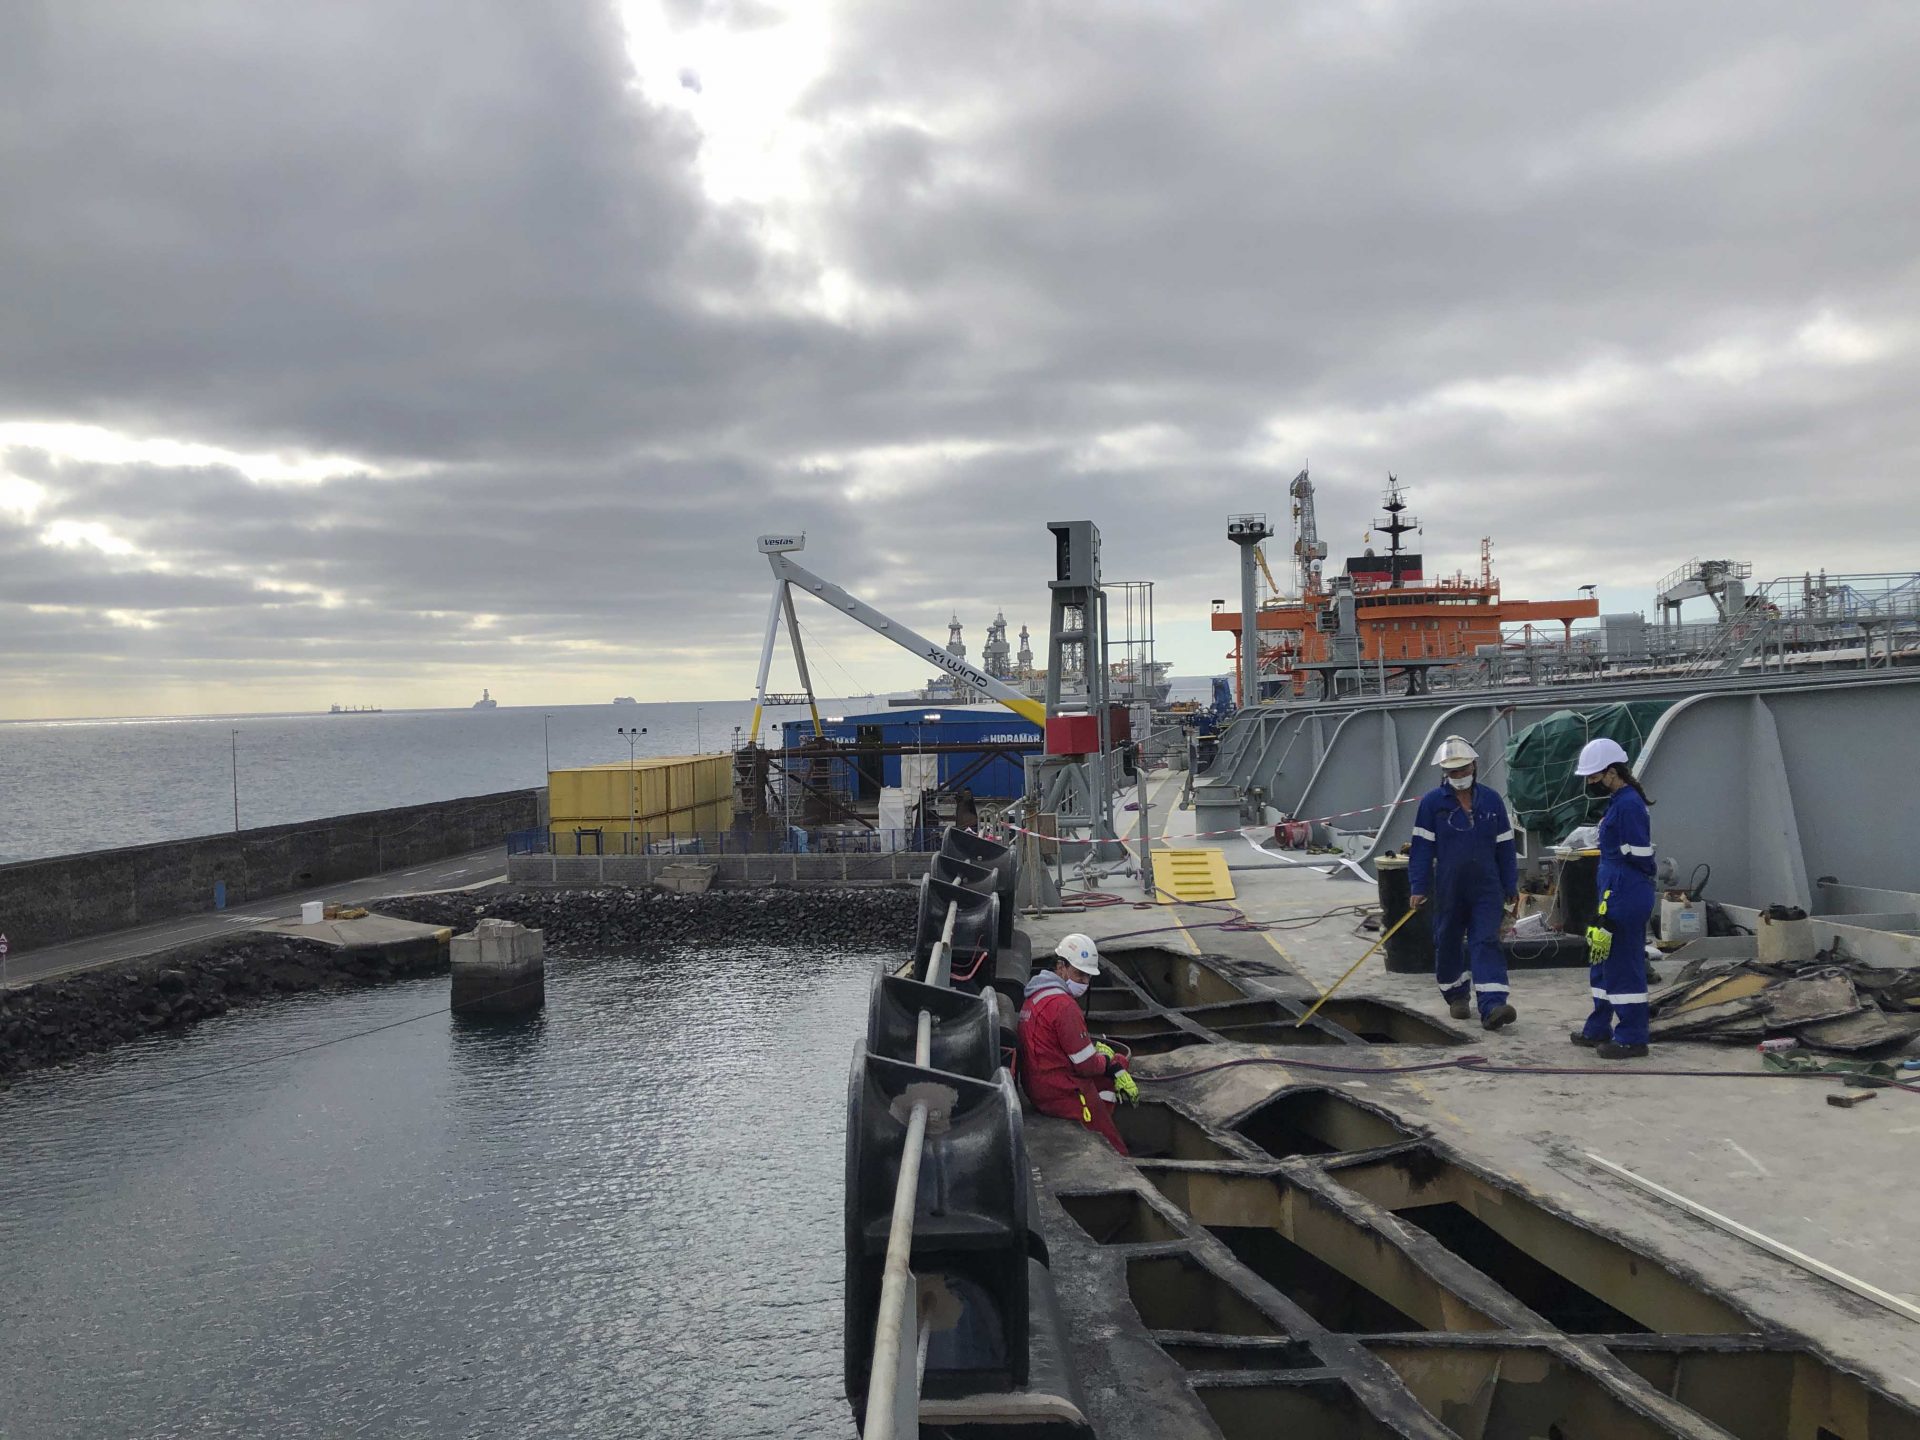 hidramar group takes on hull repair of a crude oil tanker vessel ship metal cutting 001 2